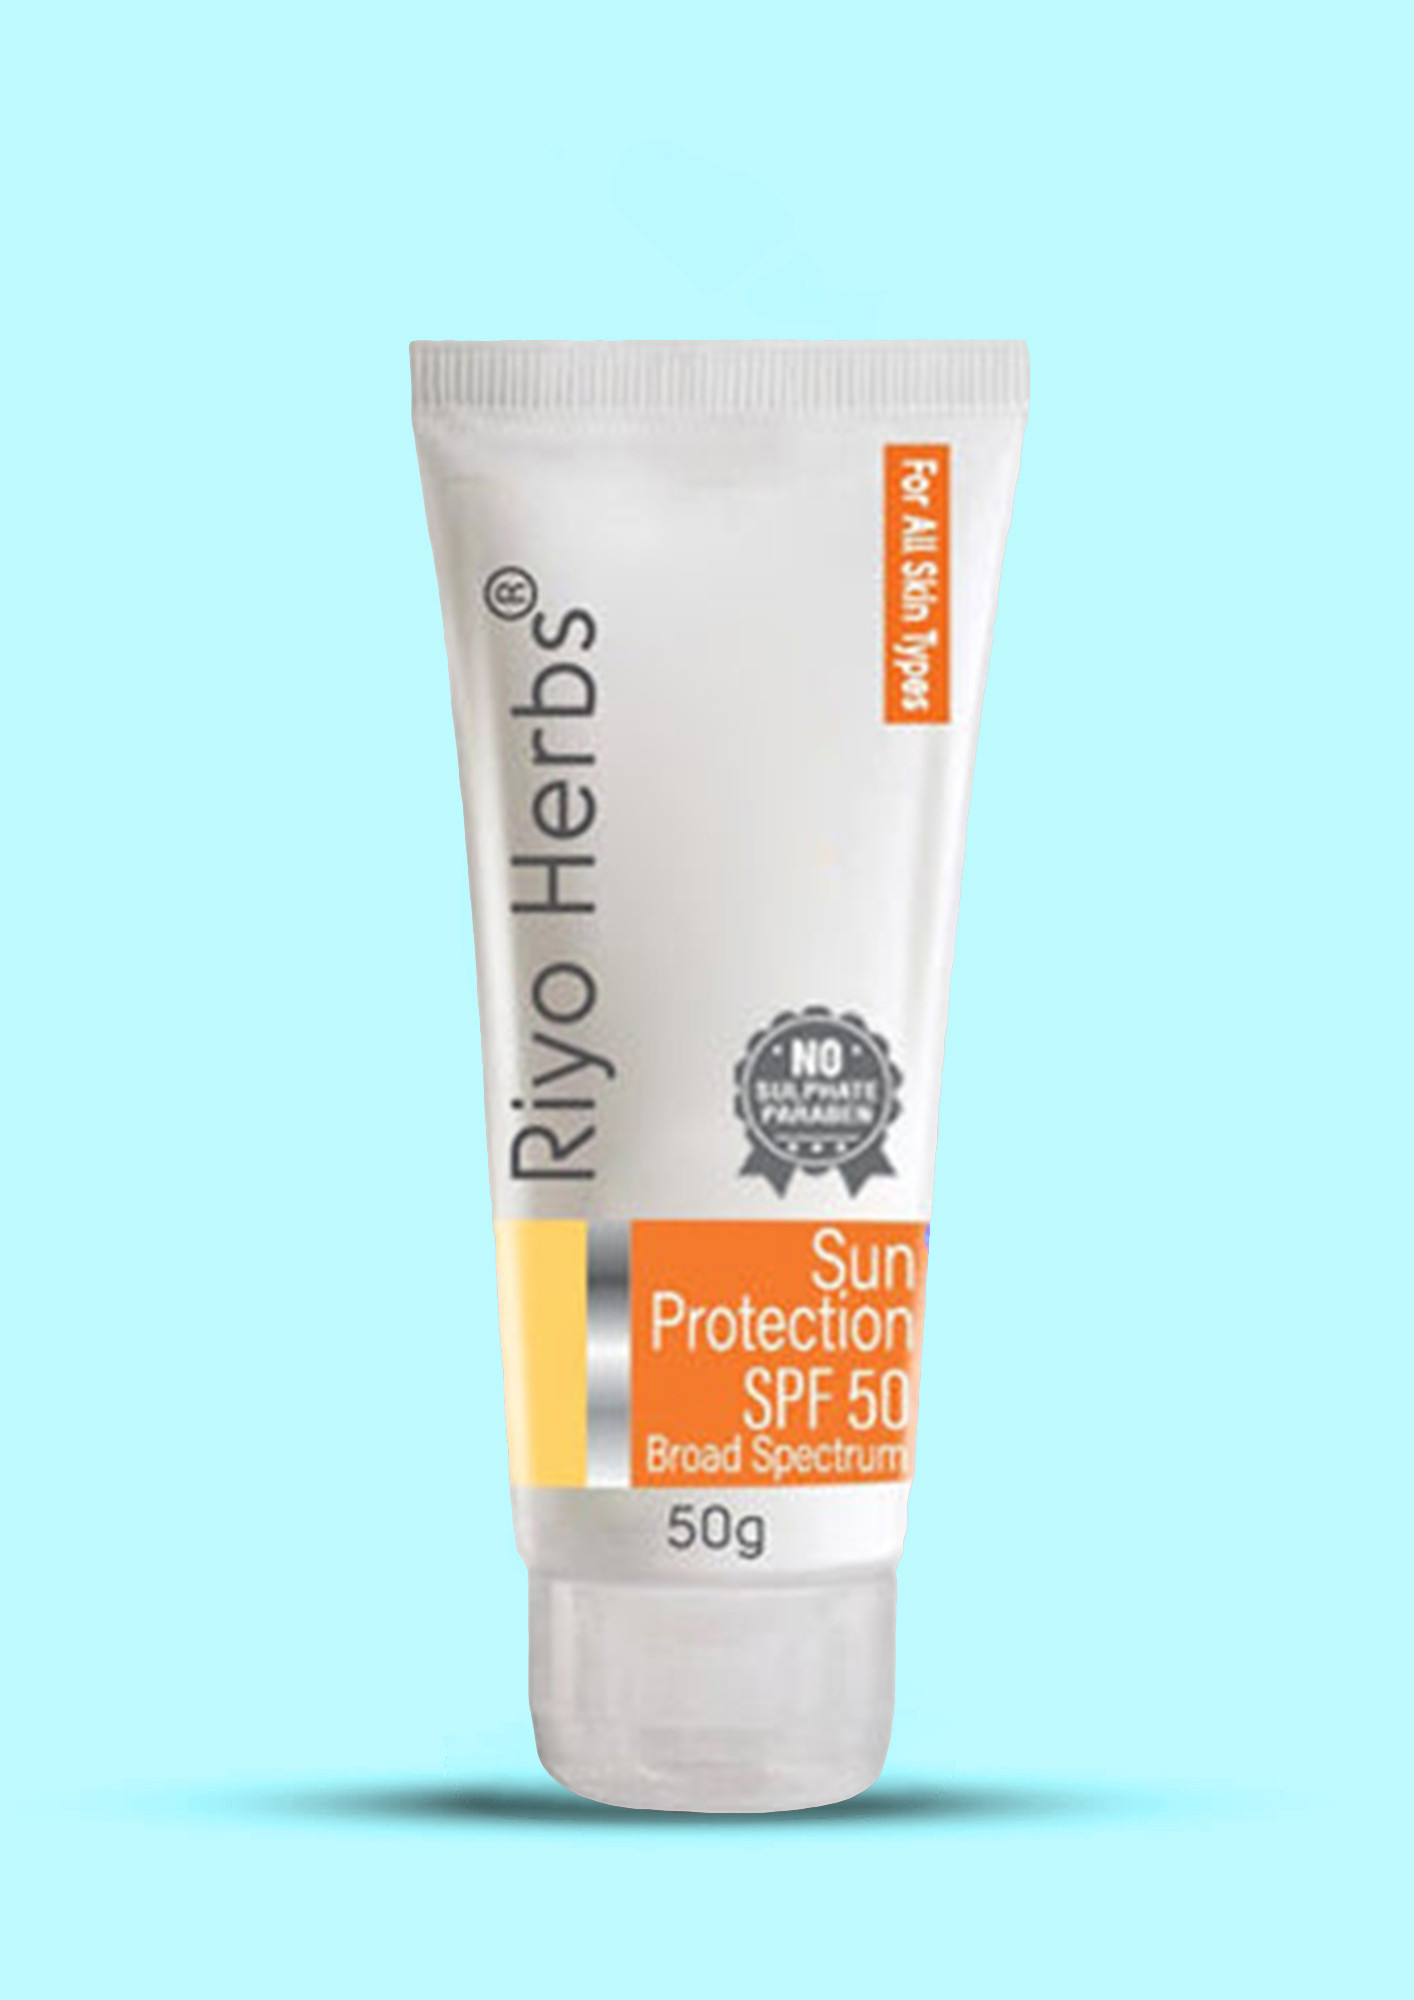 Riyo Herbs Sunscreen SPF50 broad spectrum, 50gm cream for all skin types